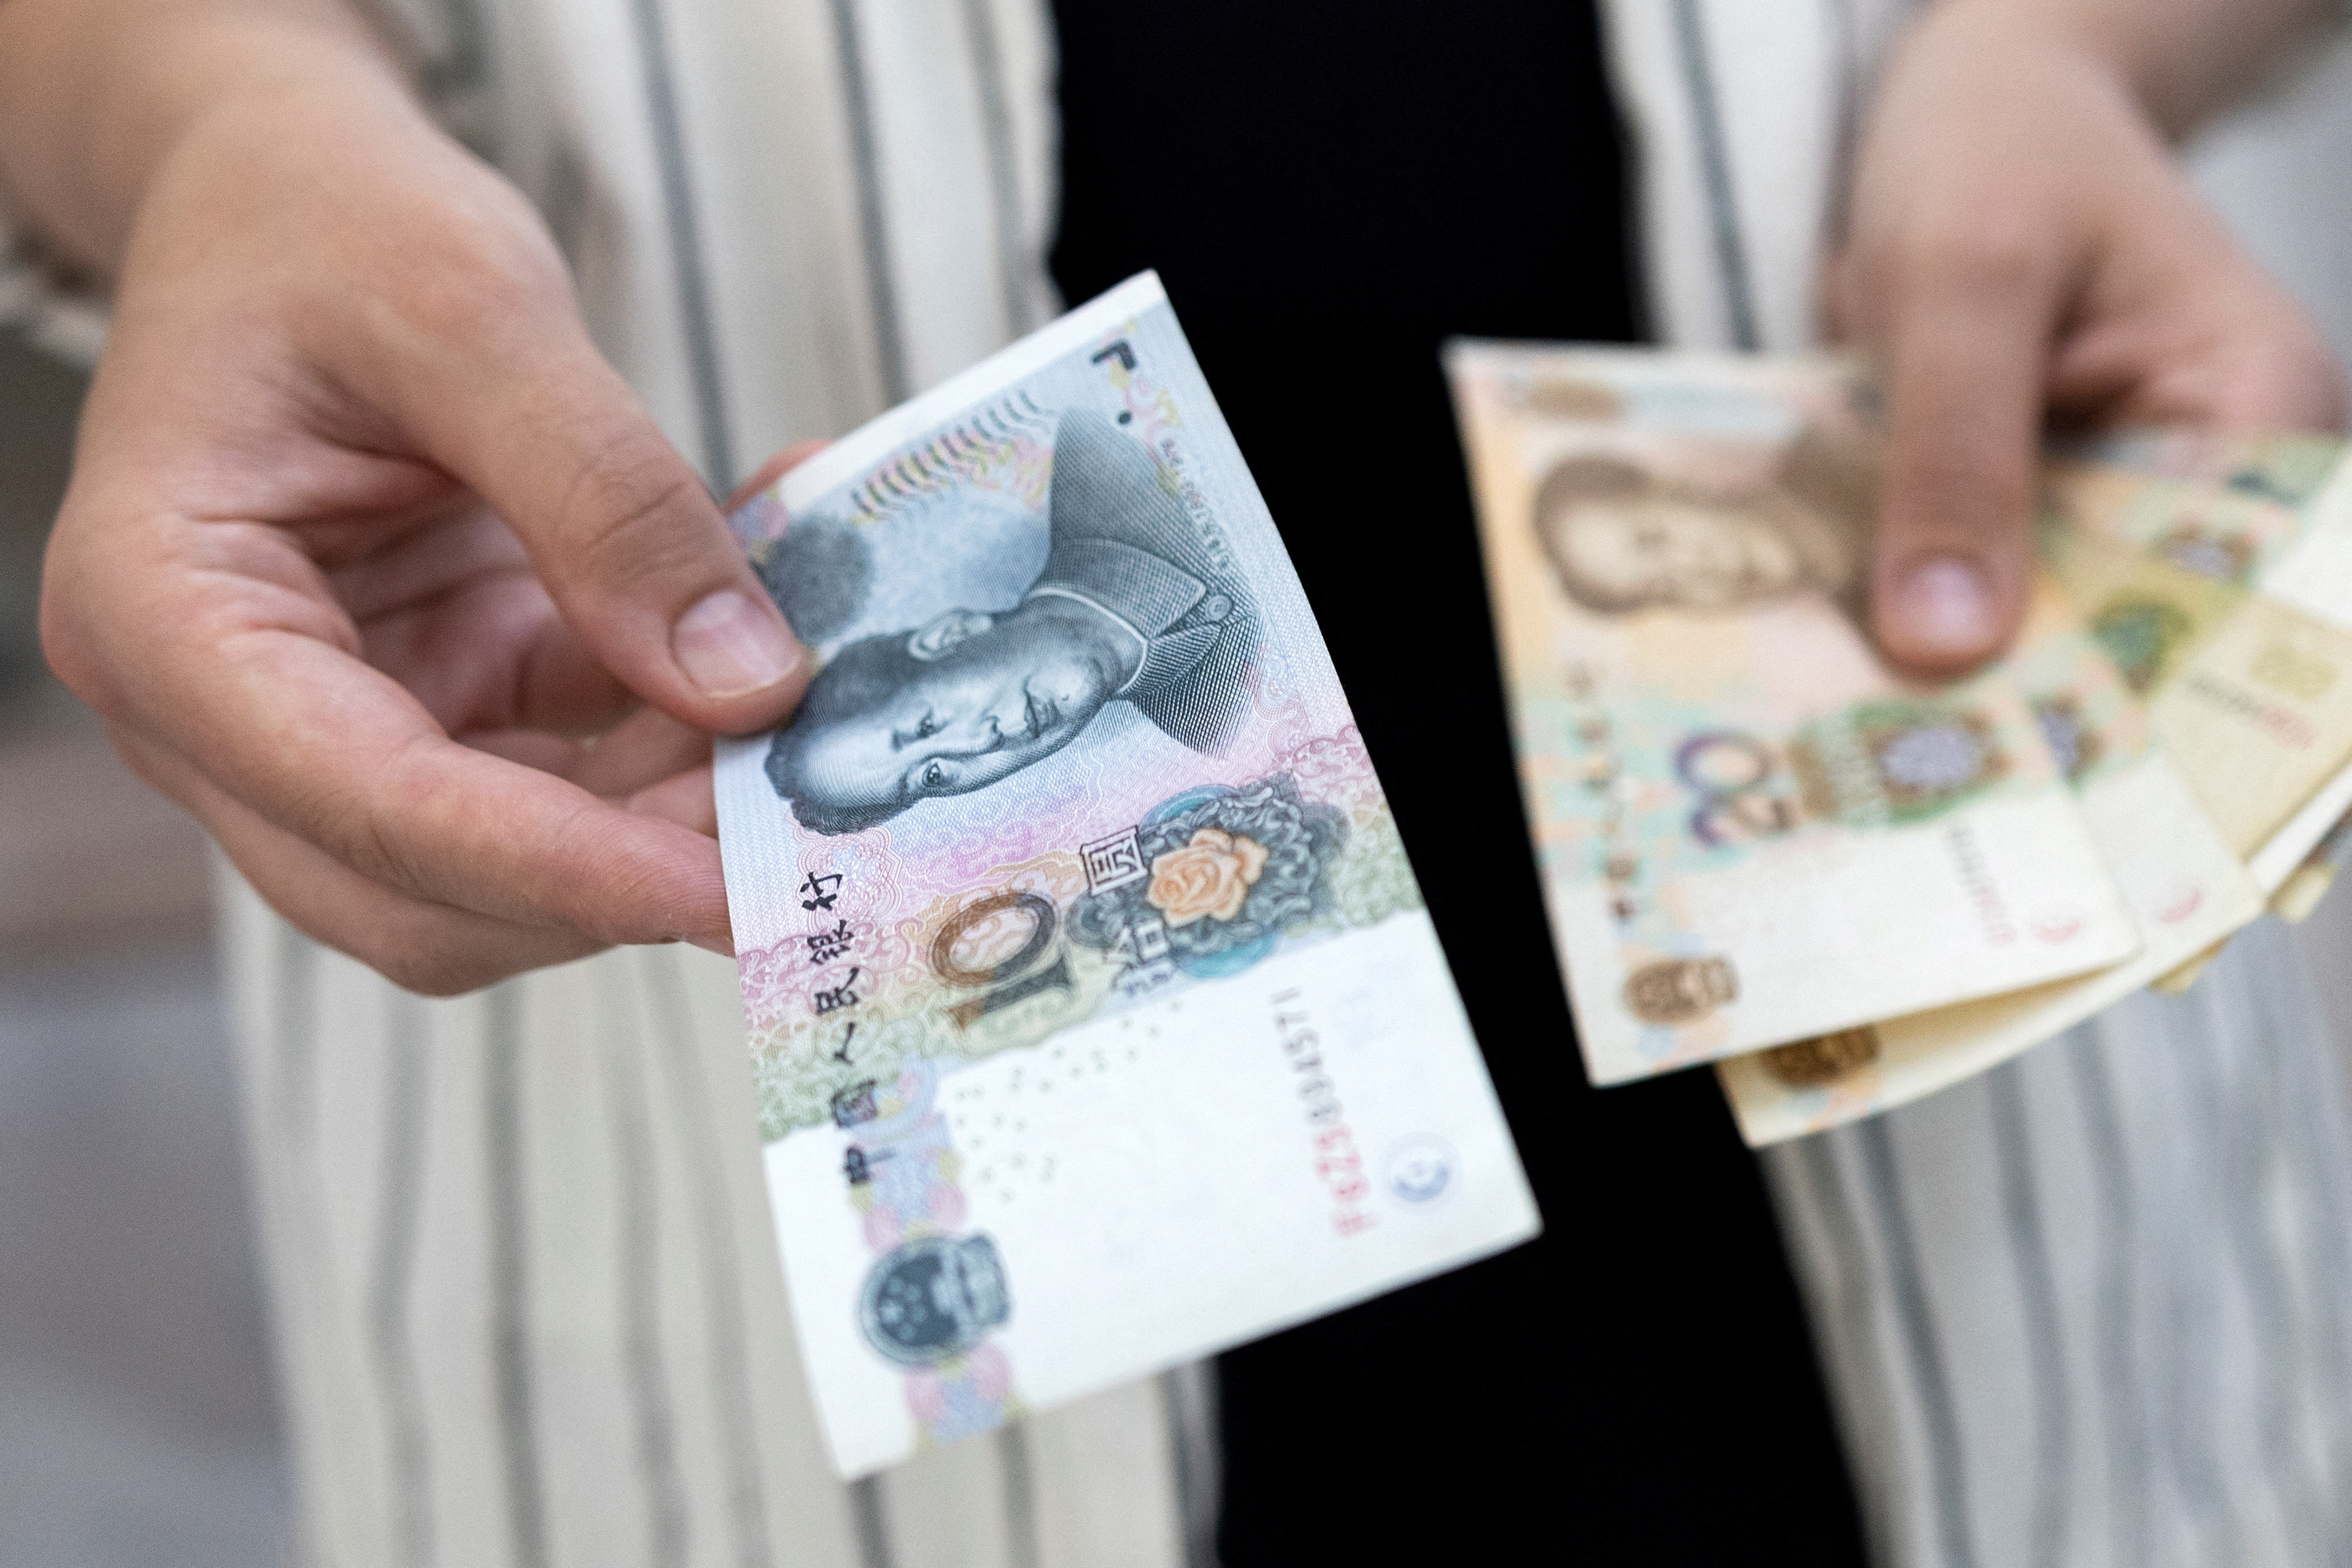 Illustration shows Chinese Yuan banknotes